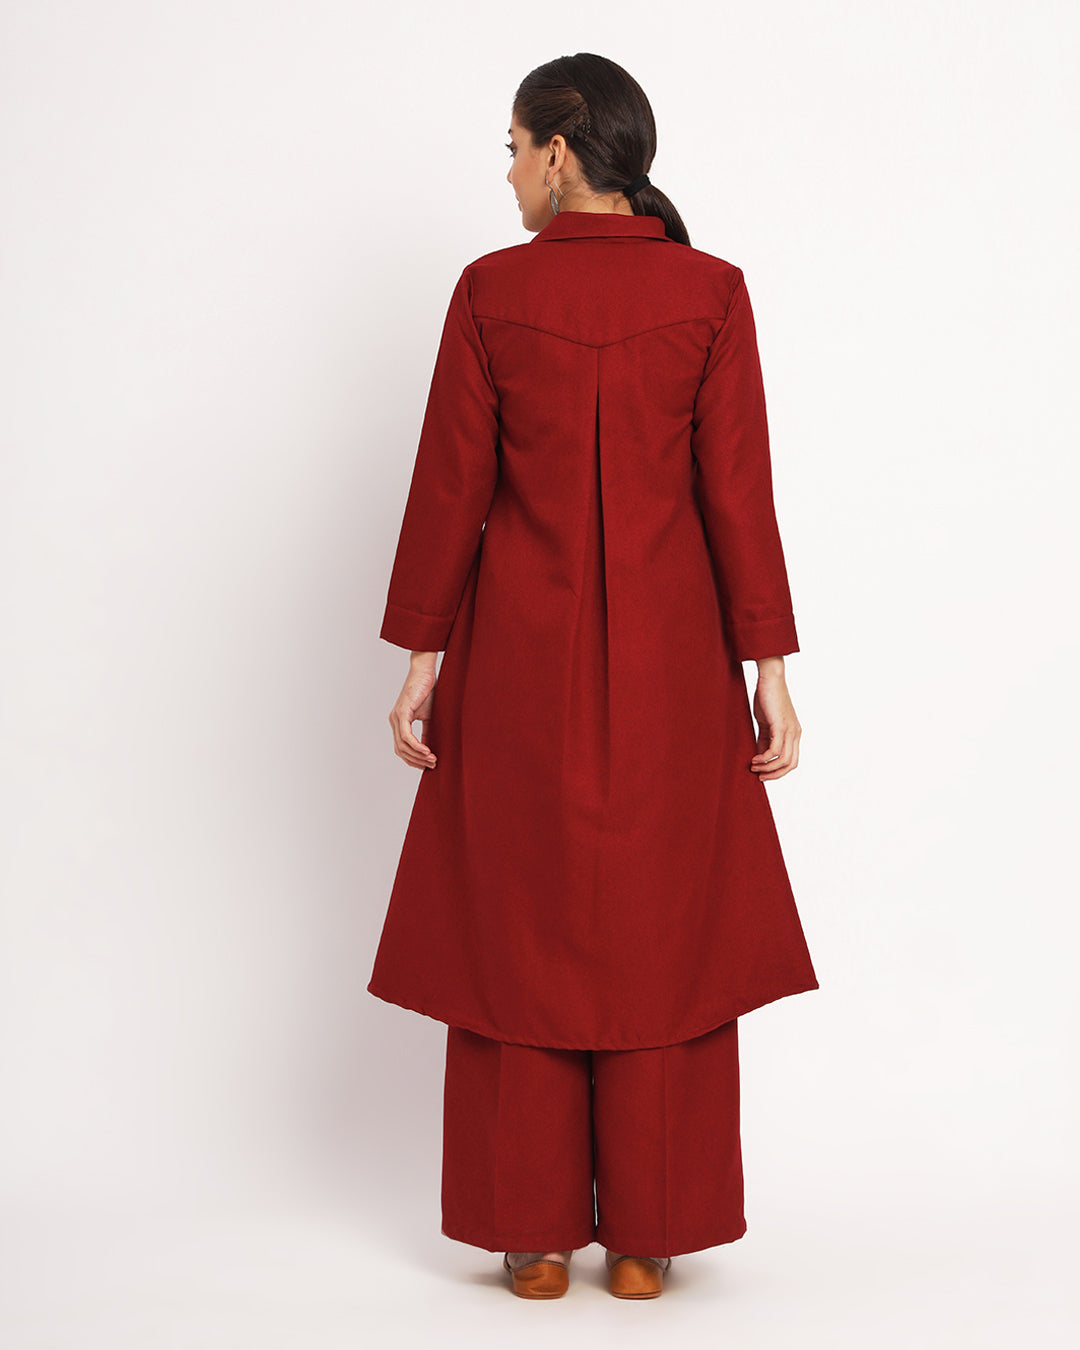 Russet Red Artful A-Line Woolen Co-ord Set